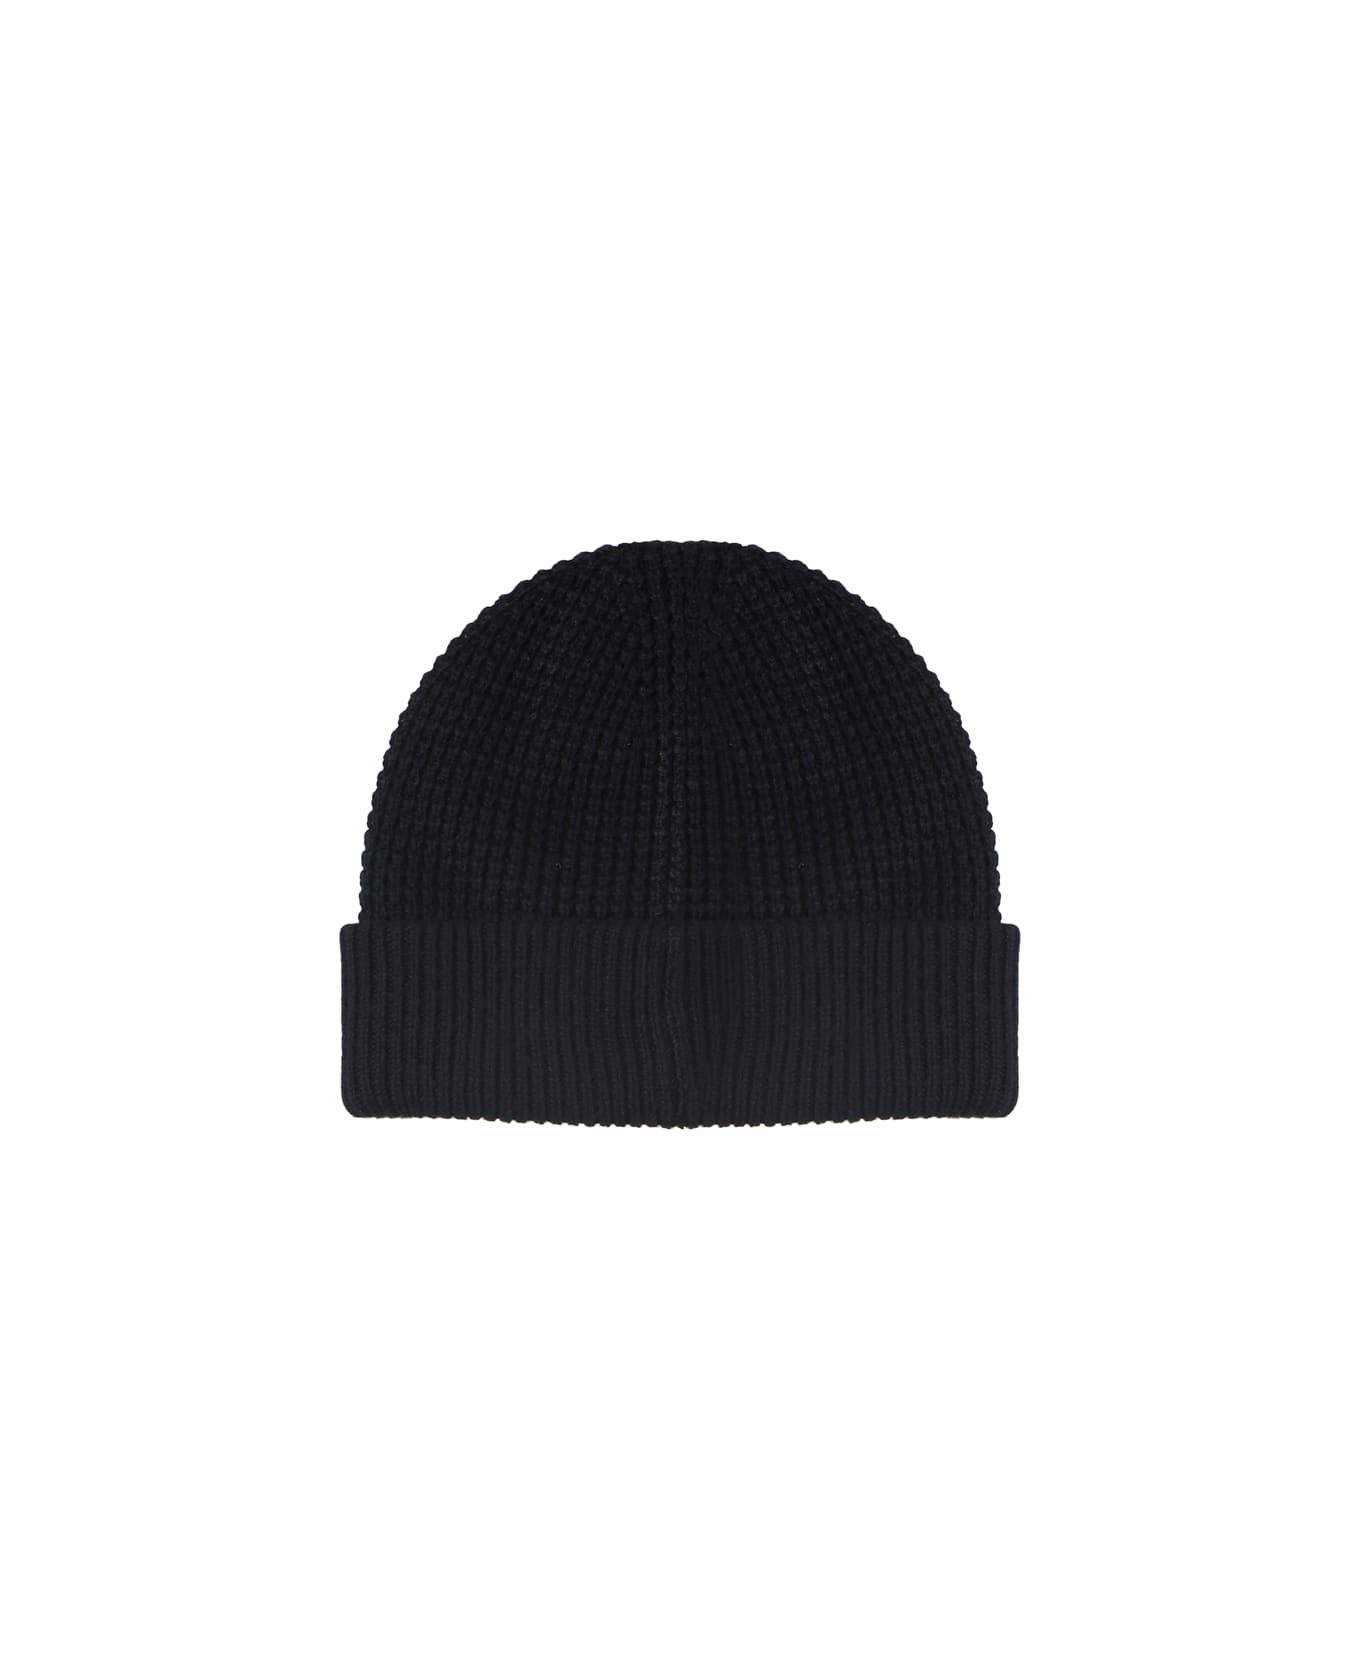 MICHAEL Michael Kors Hat With Logo - Black